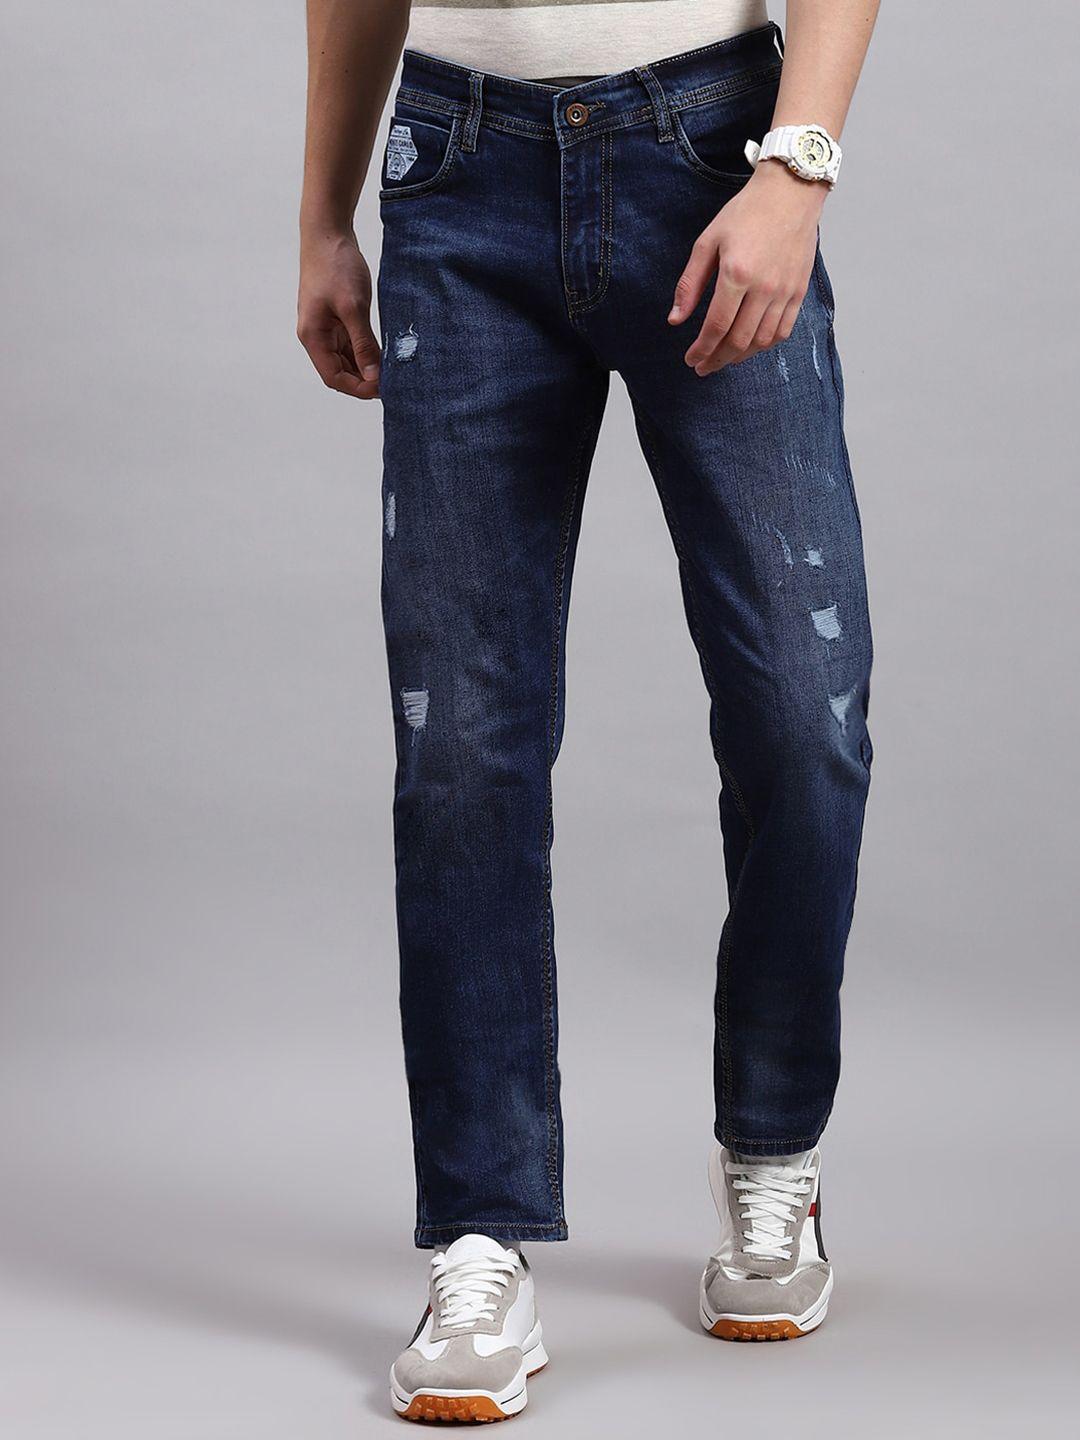 monte-carlo-men-slim-fit-mildly-distressed-light-fade-jeans